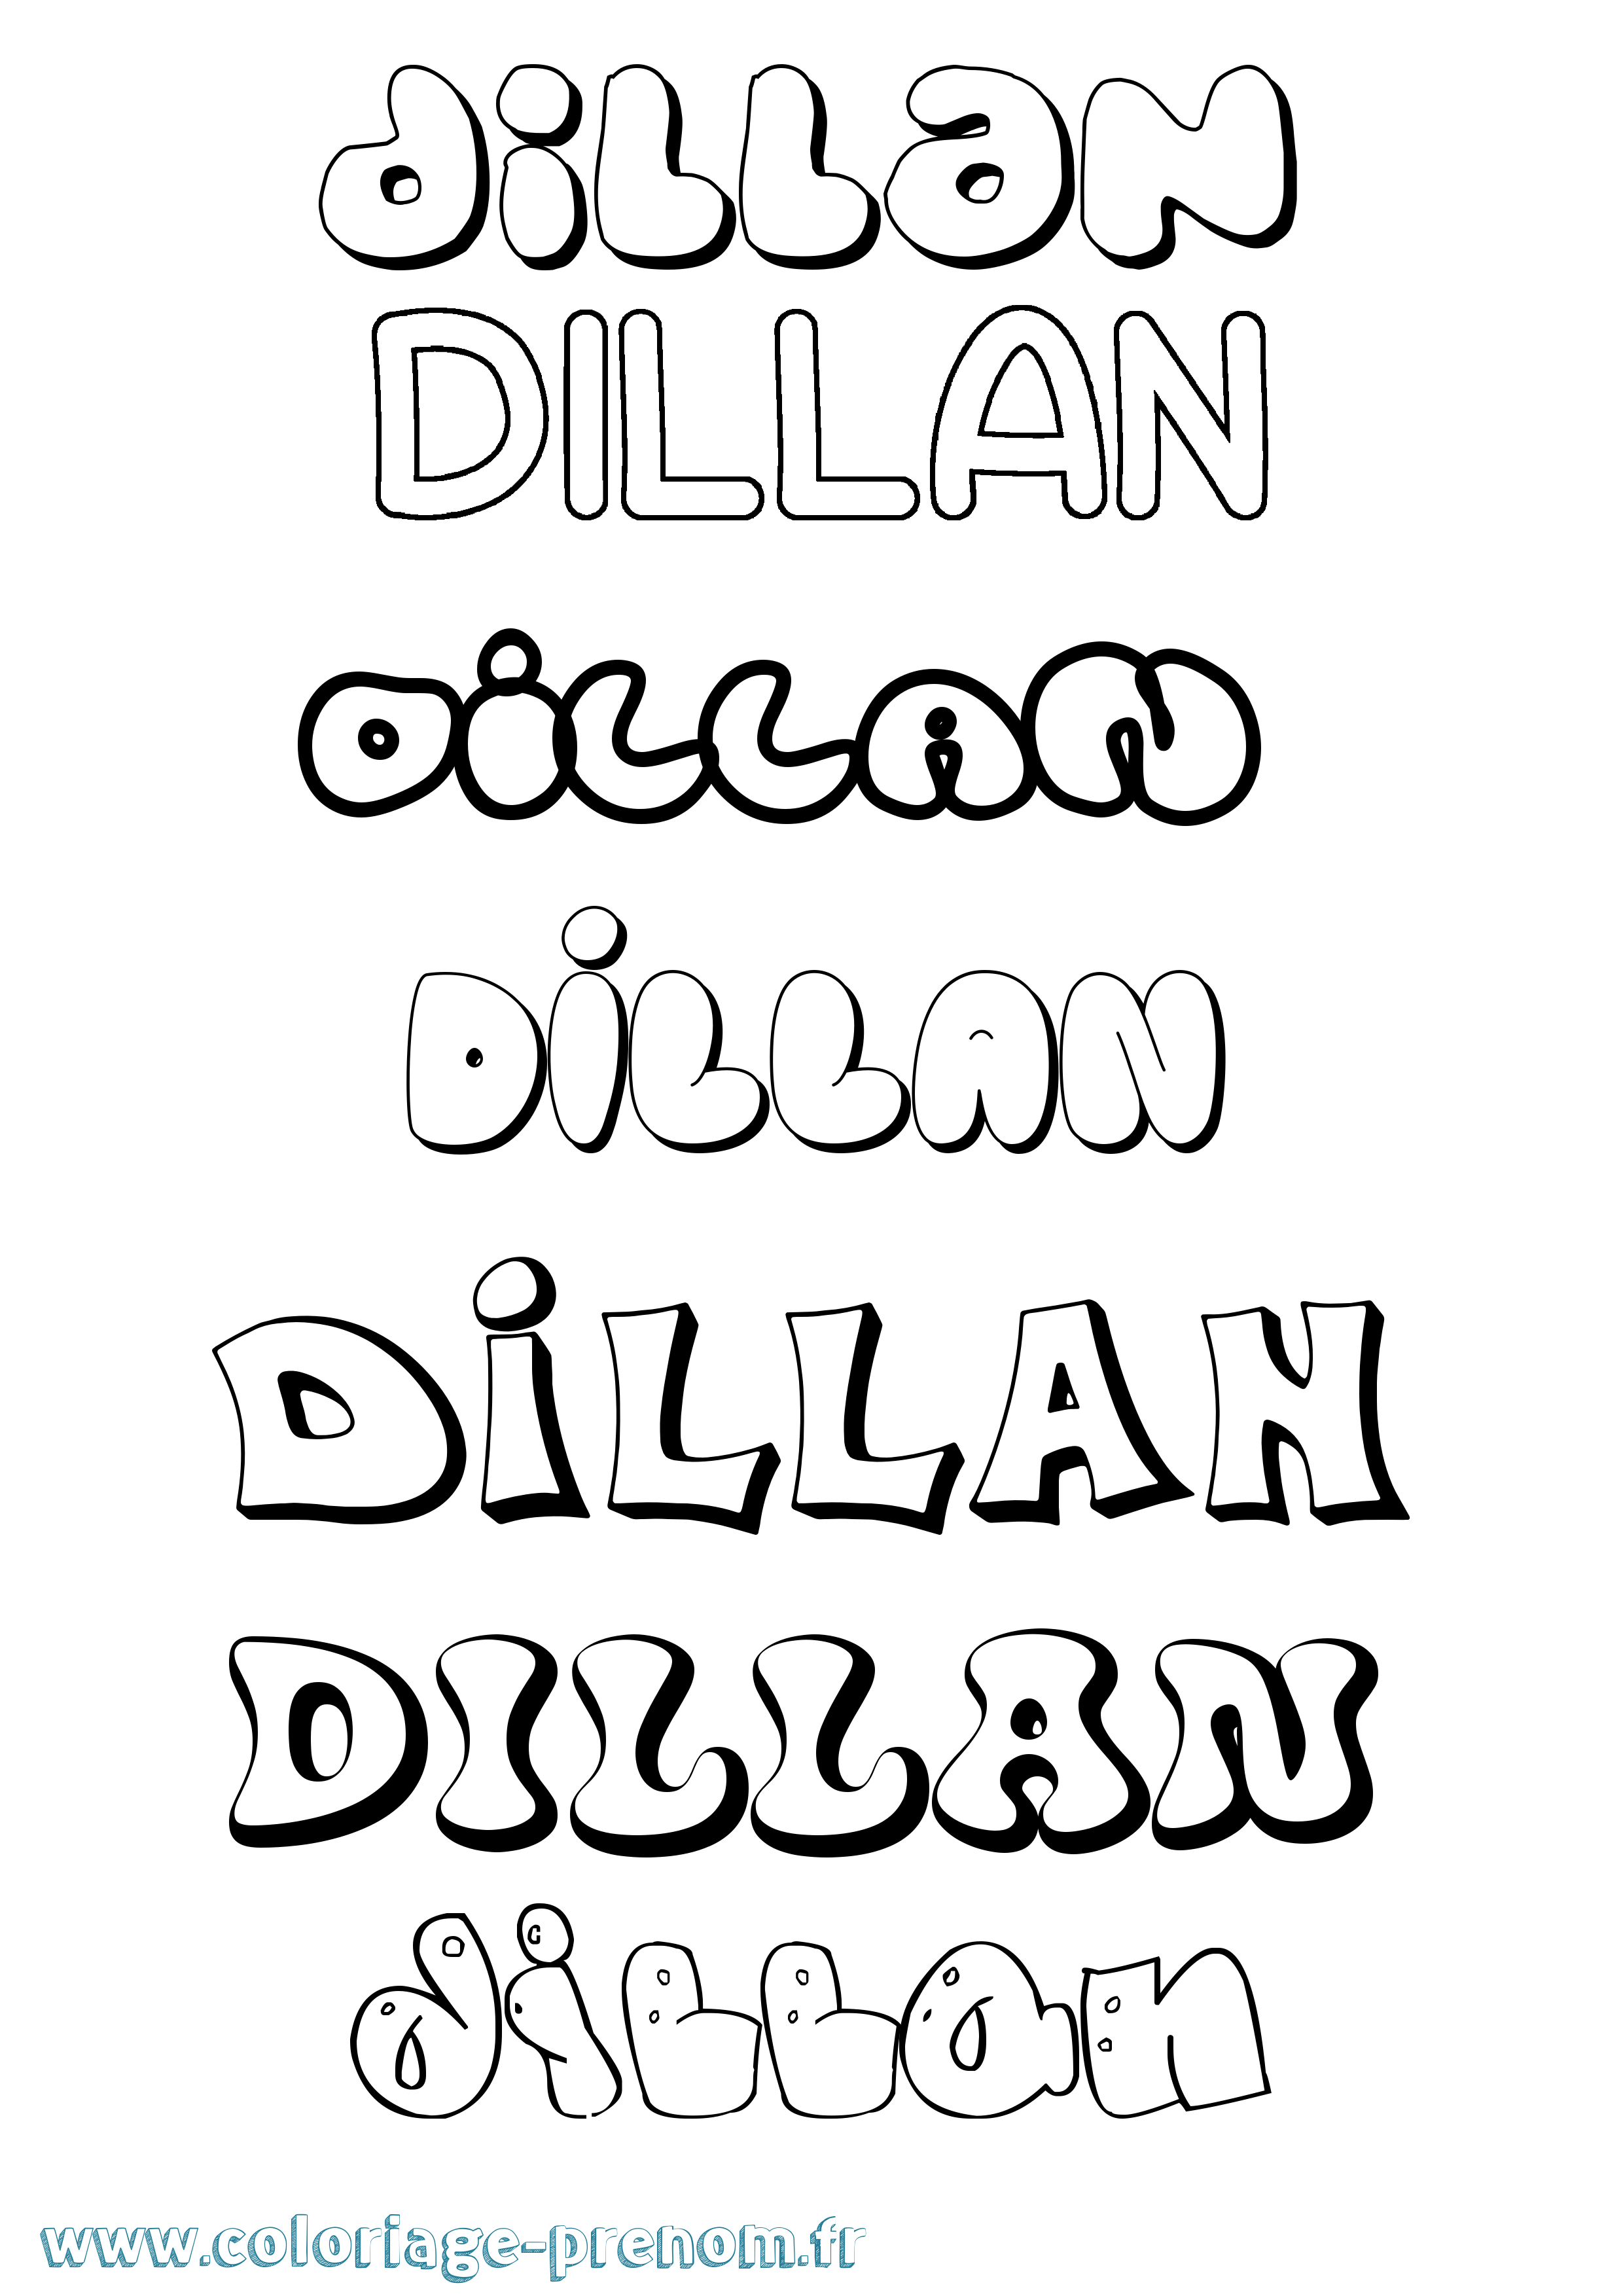 Coloriage prénom Dillan Bubble